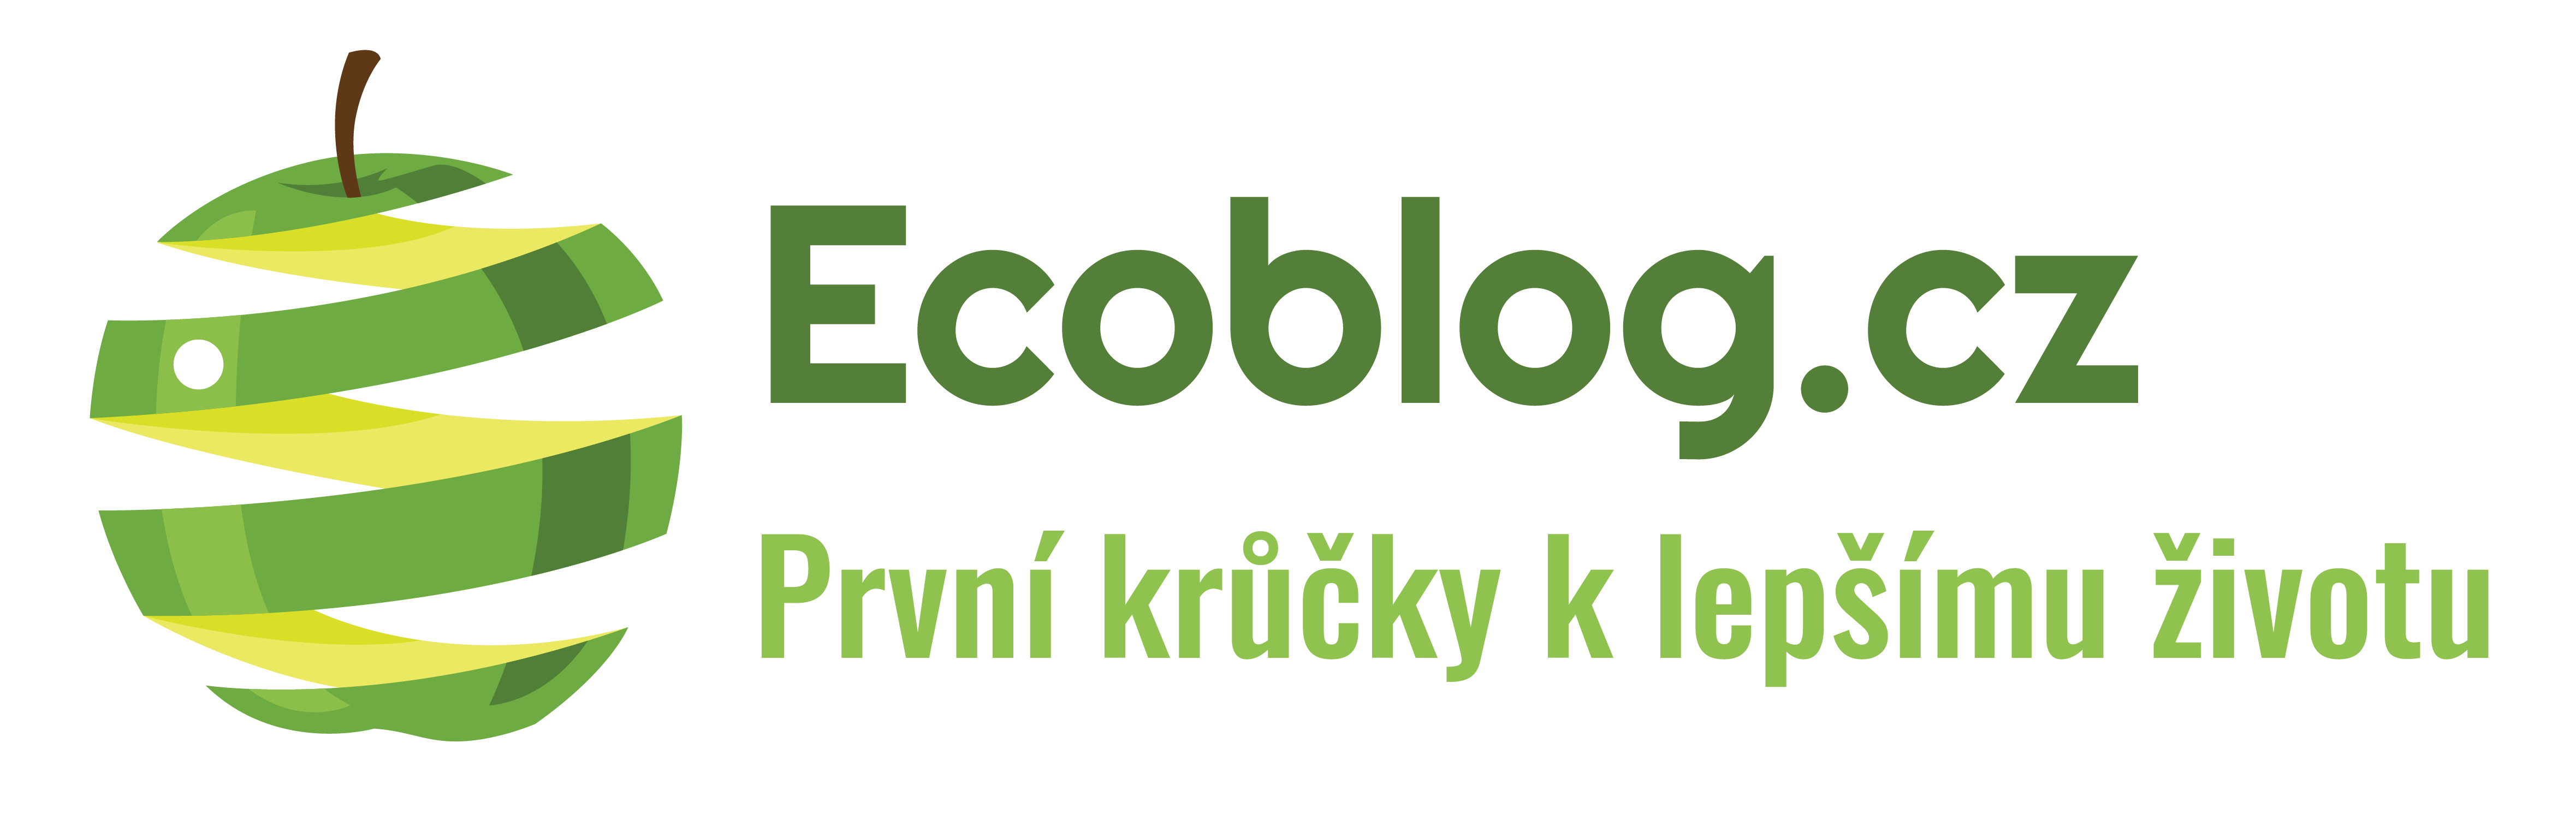 Ecoblog